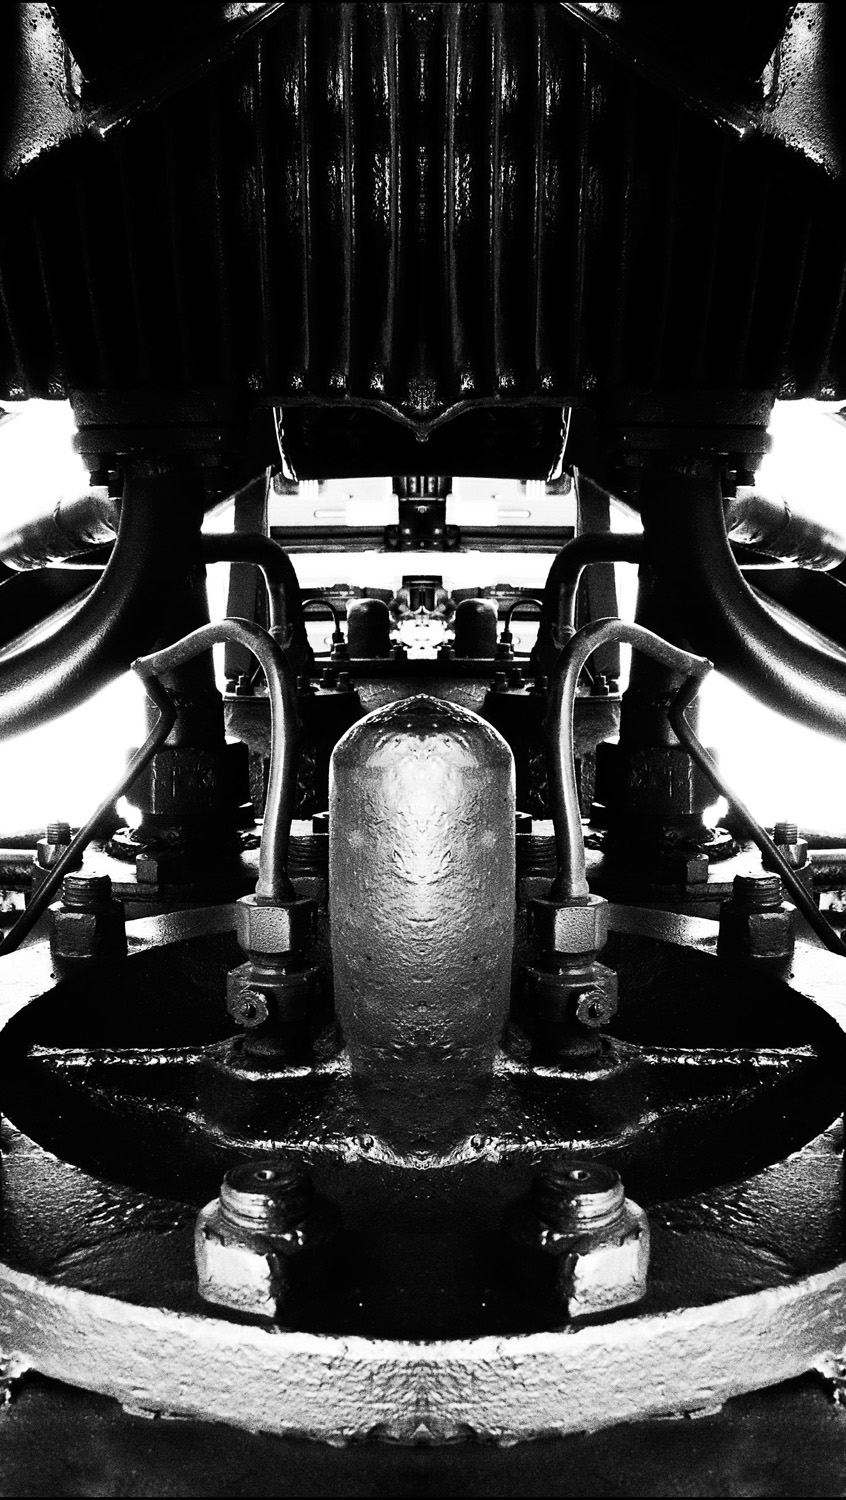 art photography dark black & white symmetry exposition art kaleidoscope industrial train maschine kristina gentvainyte cold surreal lithuania belgium